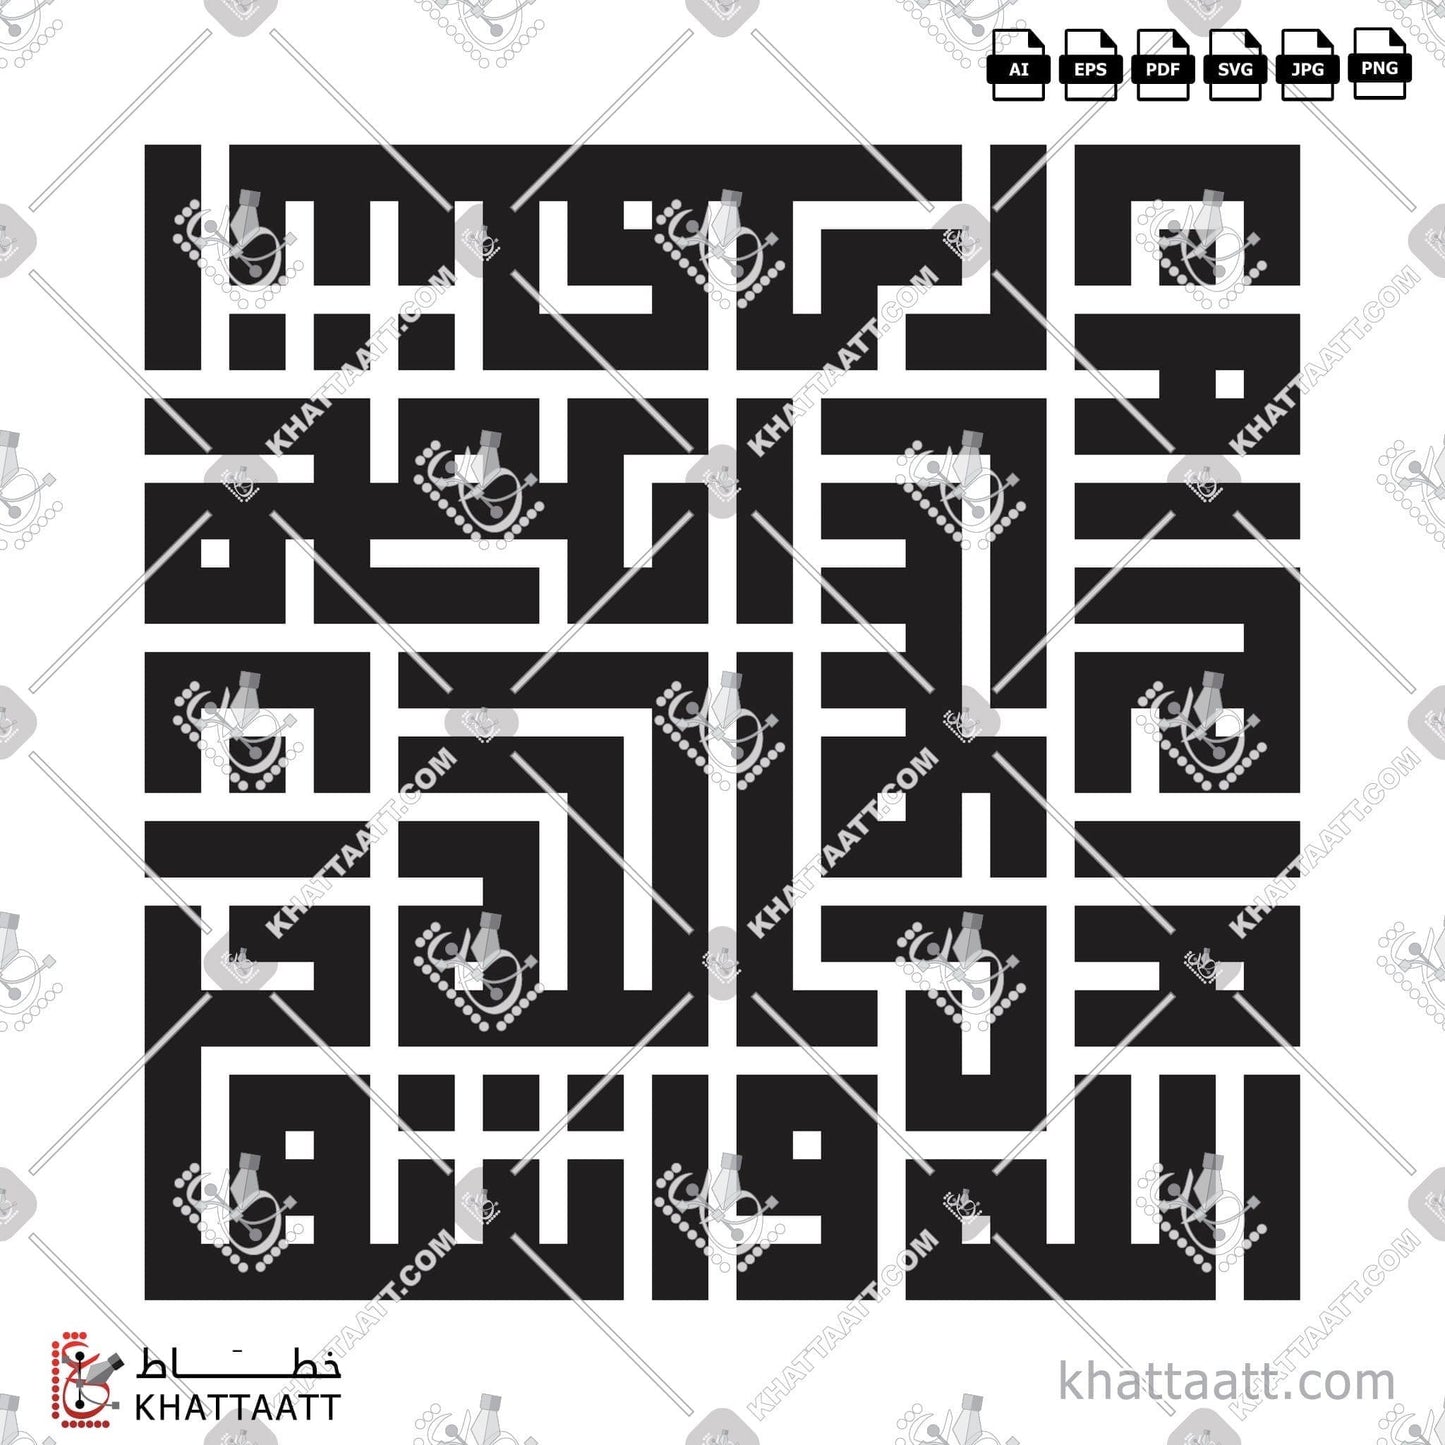 Download Arabic Calligraphy of أشهد أن لا إله إلا الله وأشهد أن محمدا رسول الله in Kufi - الخط الكوفي in vector and .png